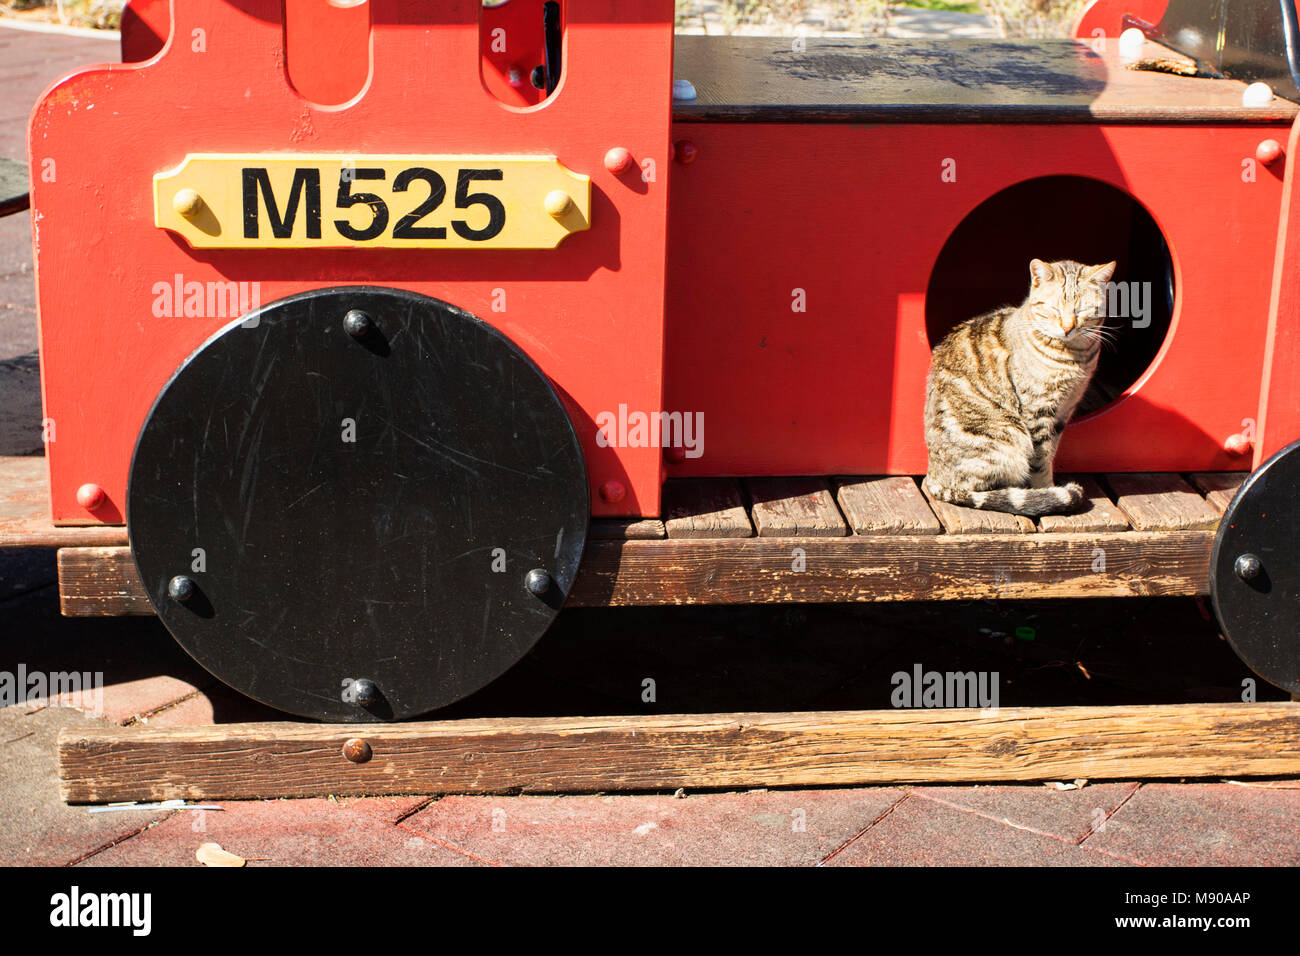 Cat on red playground train the limassol Municipal gardens in spring, Limmasol, Cyprus, Mediterranean Stock Photo